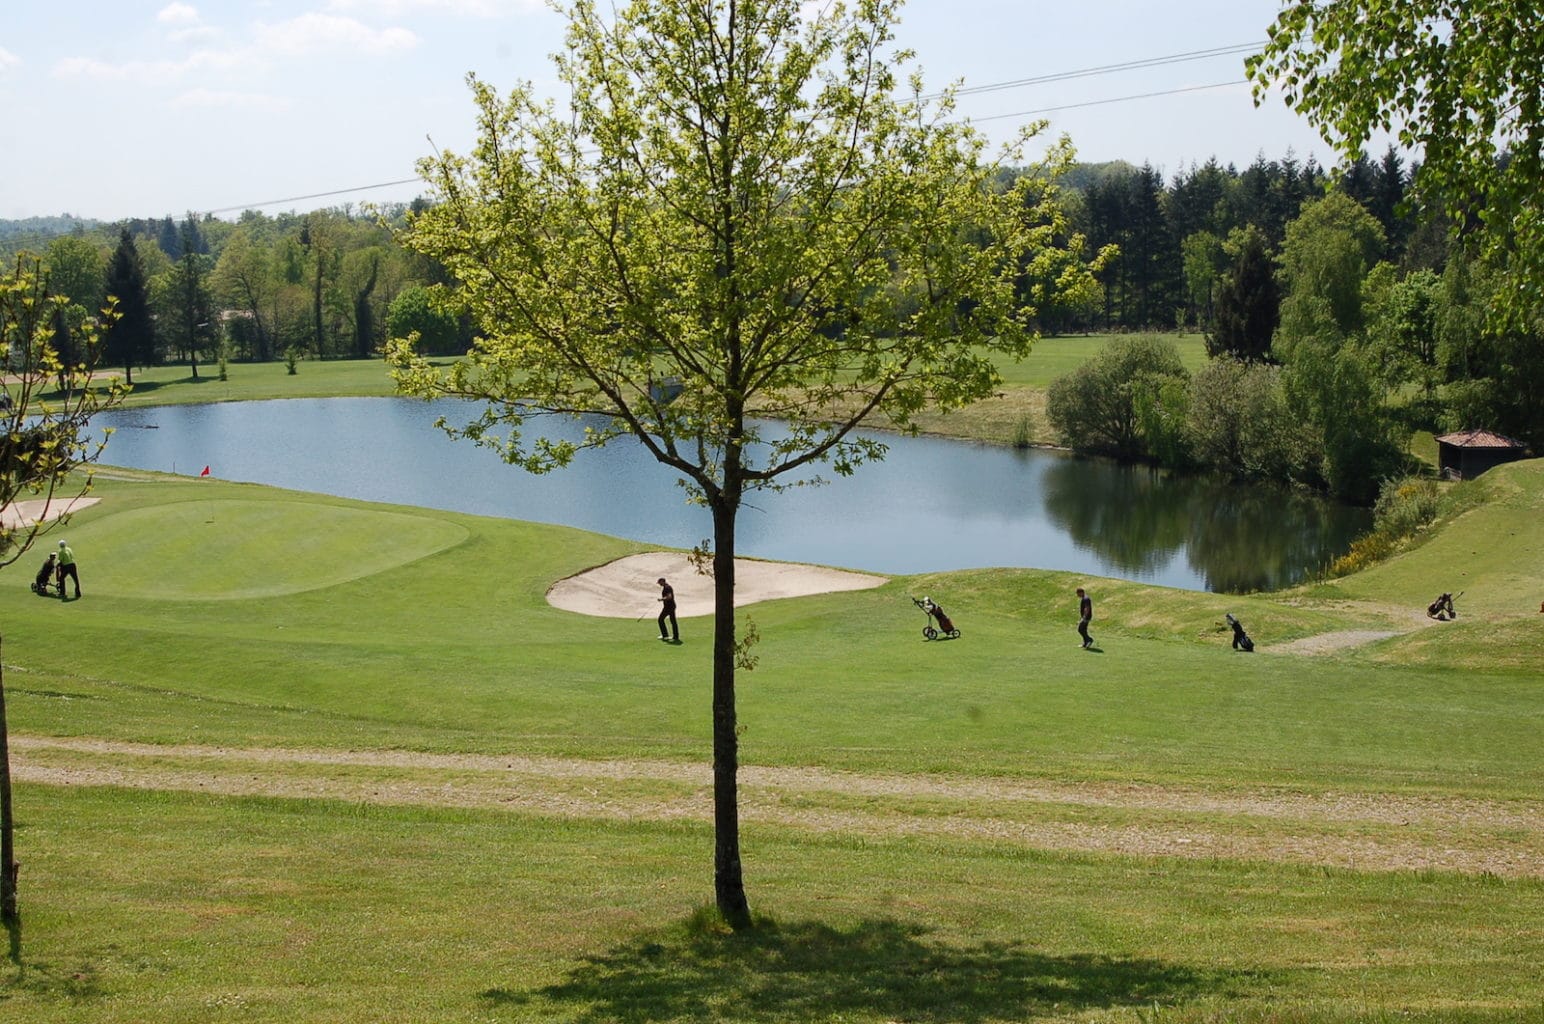 Golf International de la Prèze